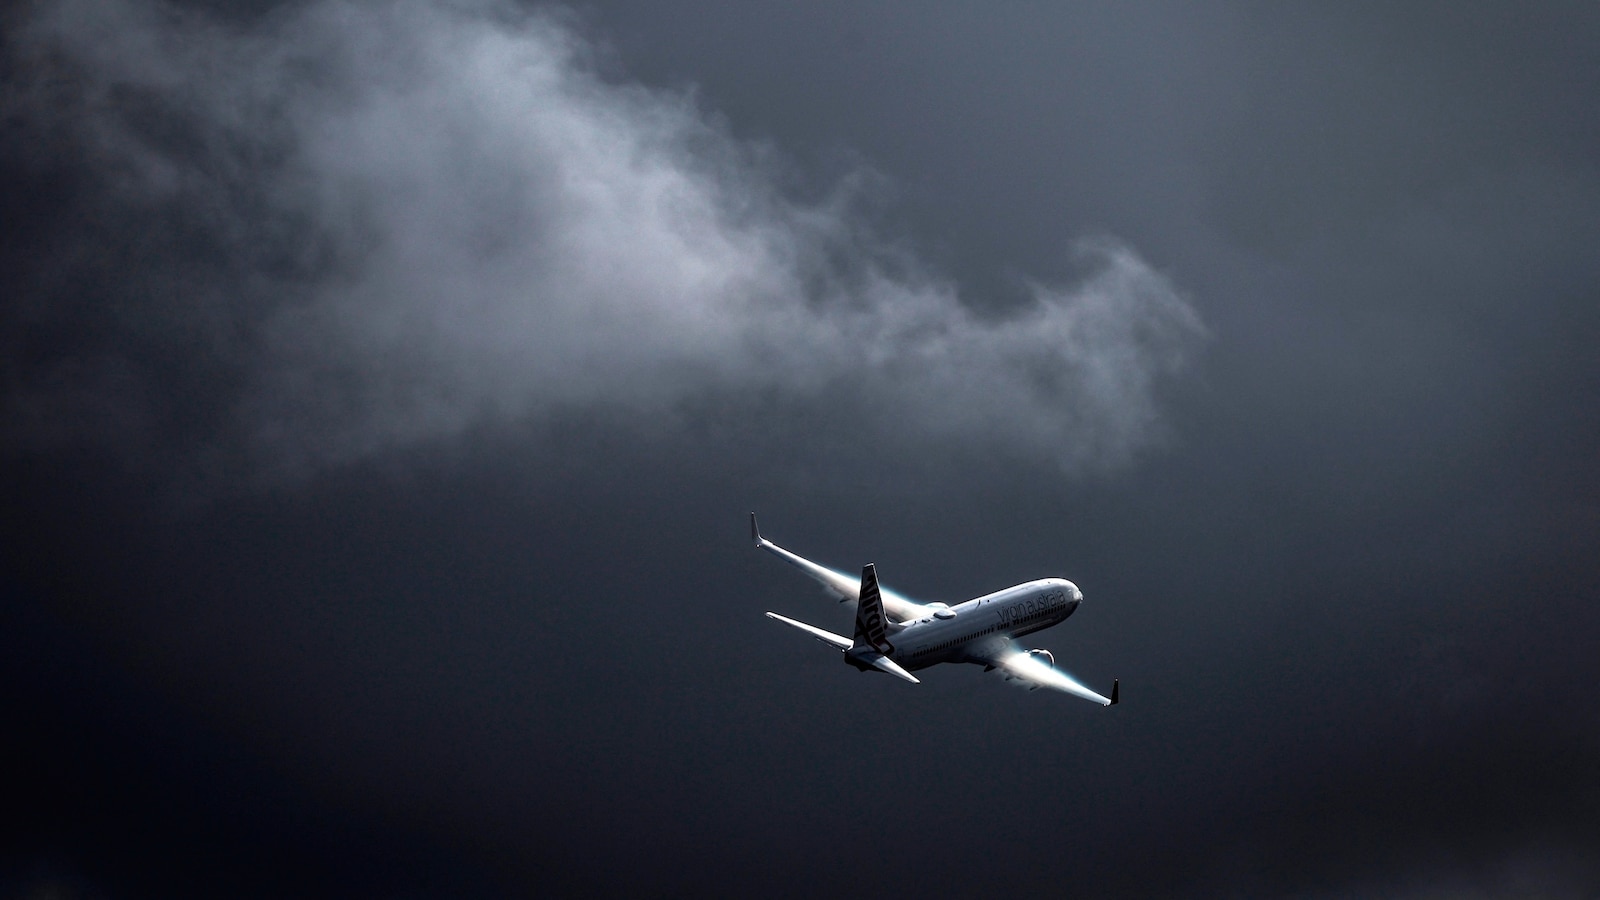 Virgin Australia flight makes emergency landing in New Zealand following suspected bird strike